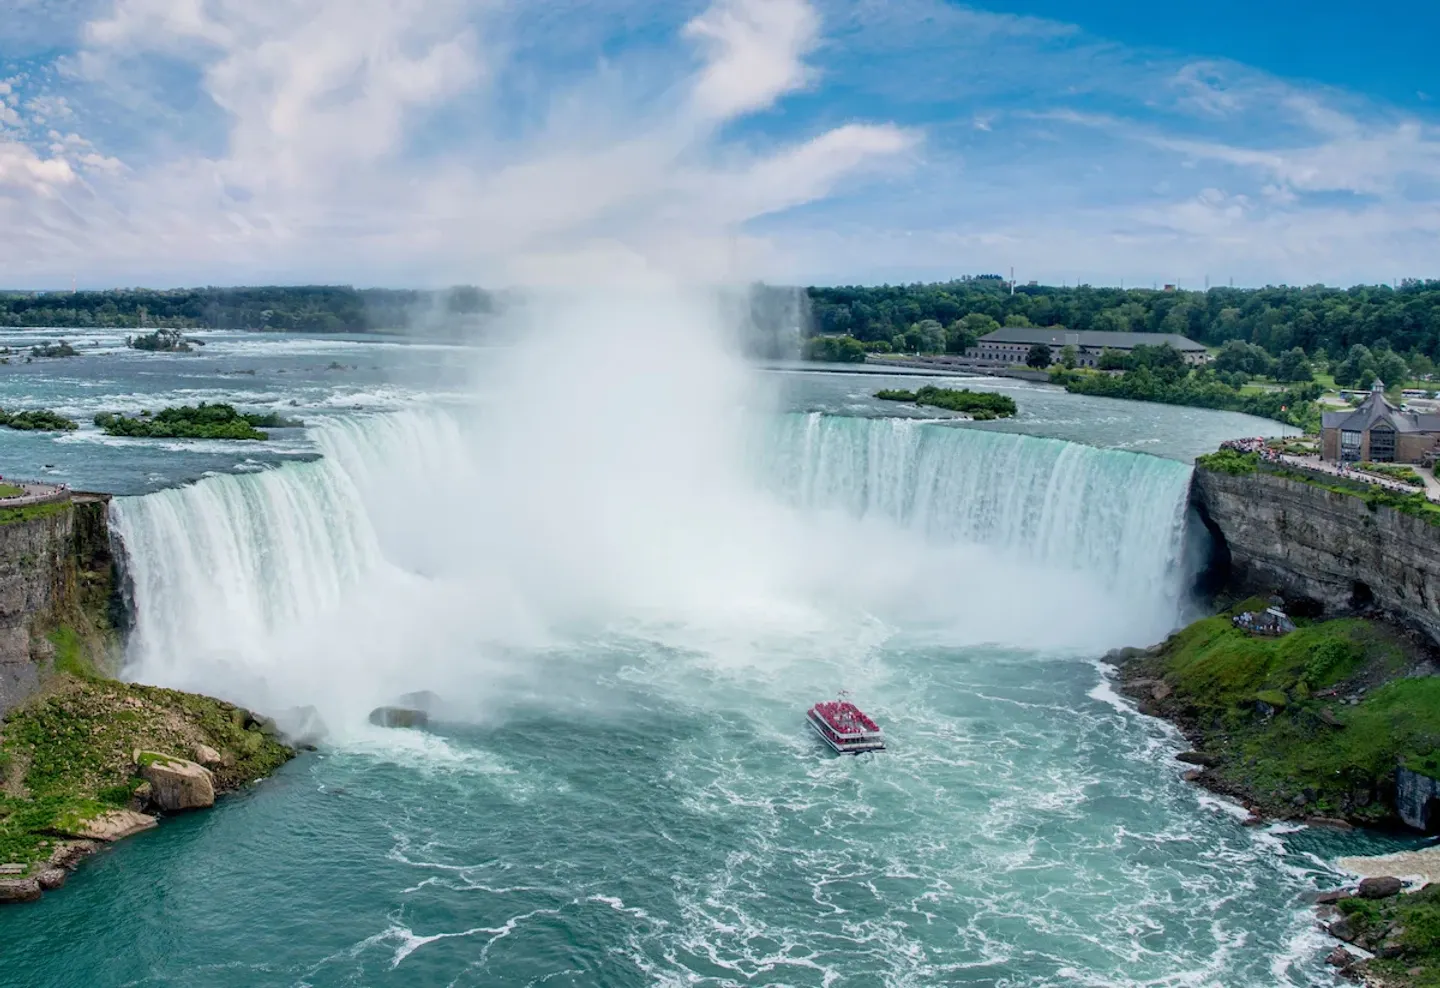 Niagara Falls Getaway